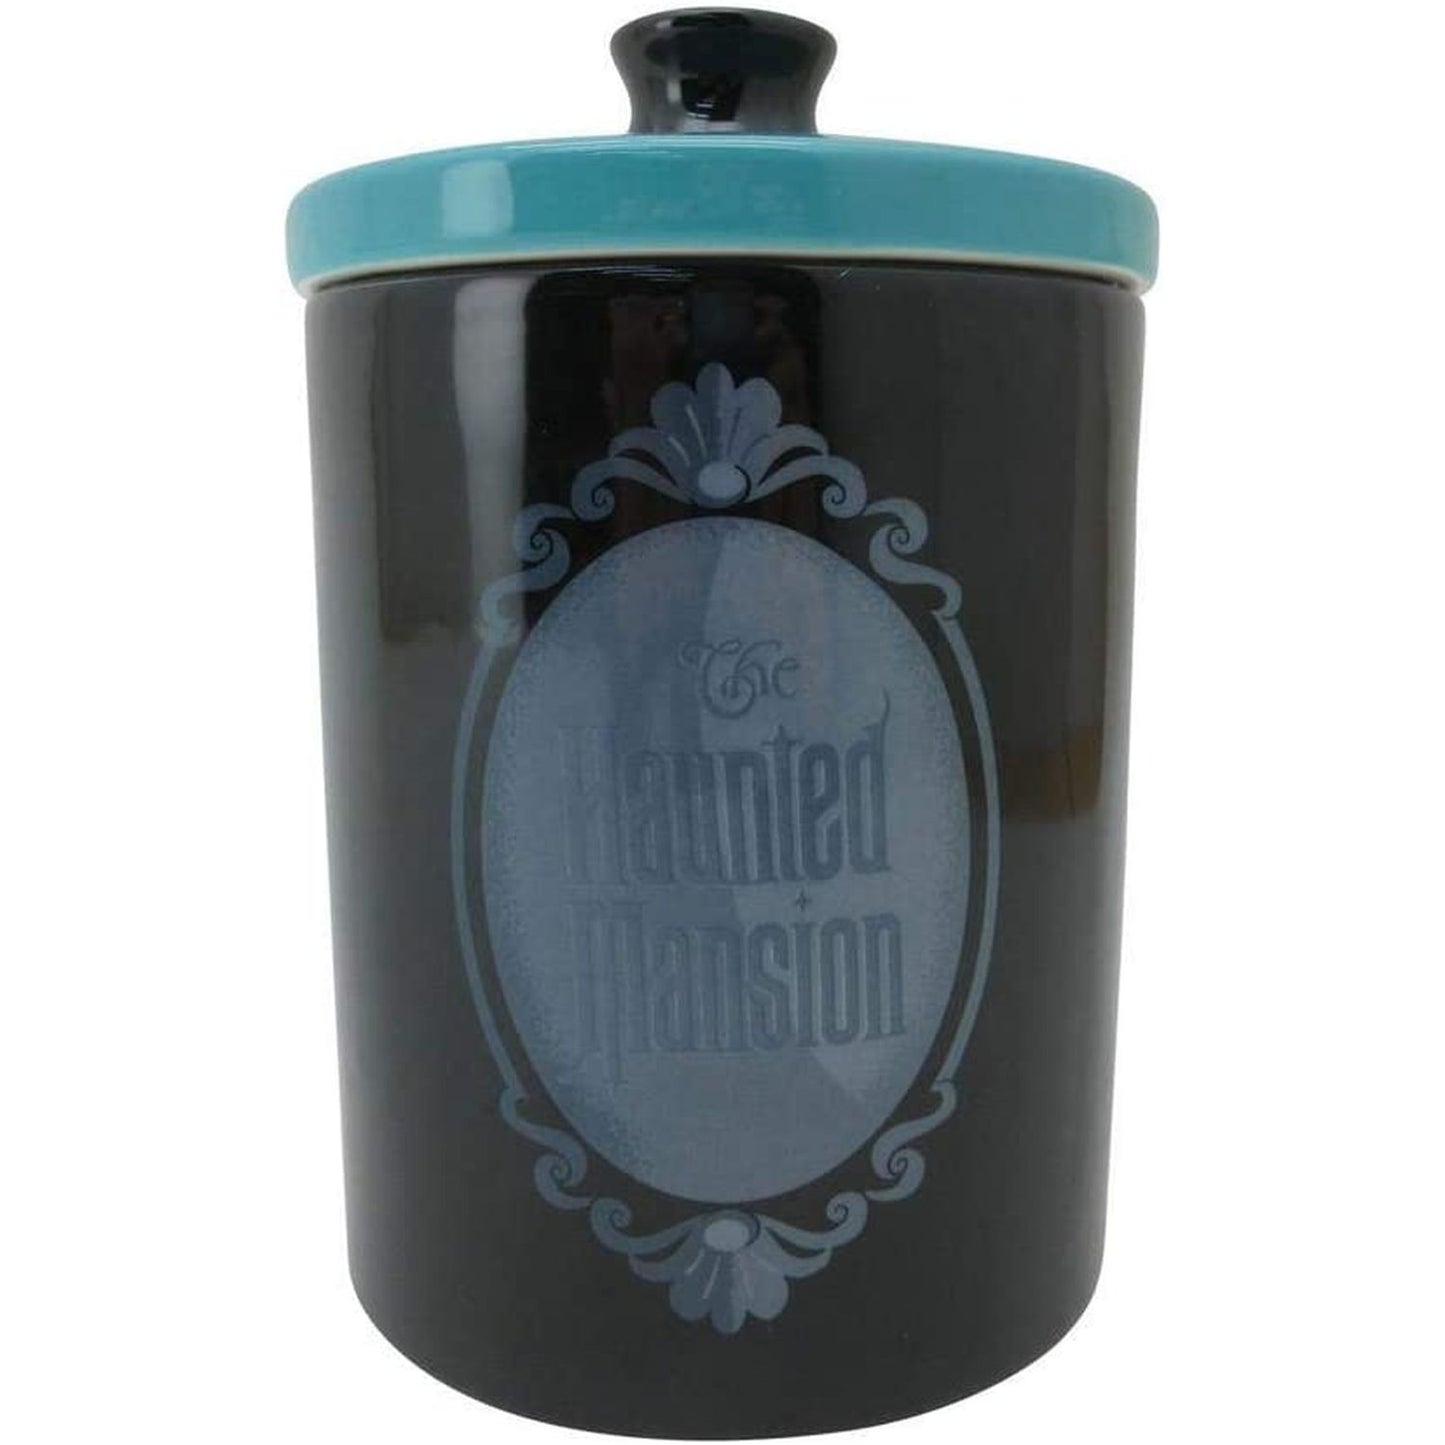 Enesco Disney Ceramics Disney Haunted Mansion Cookie Jar, 8"